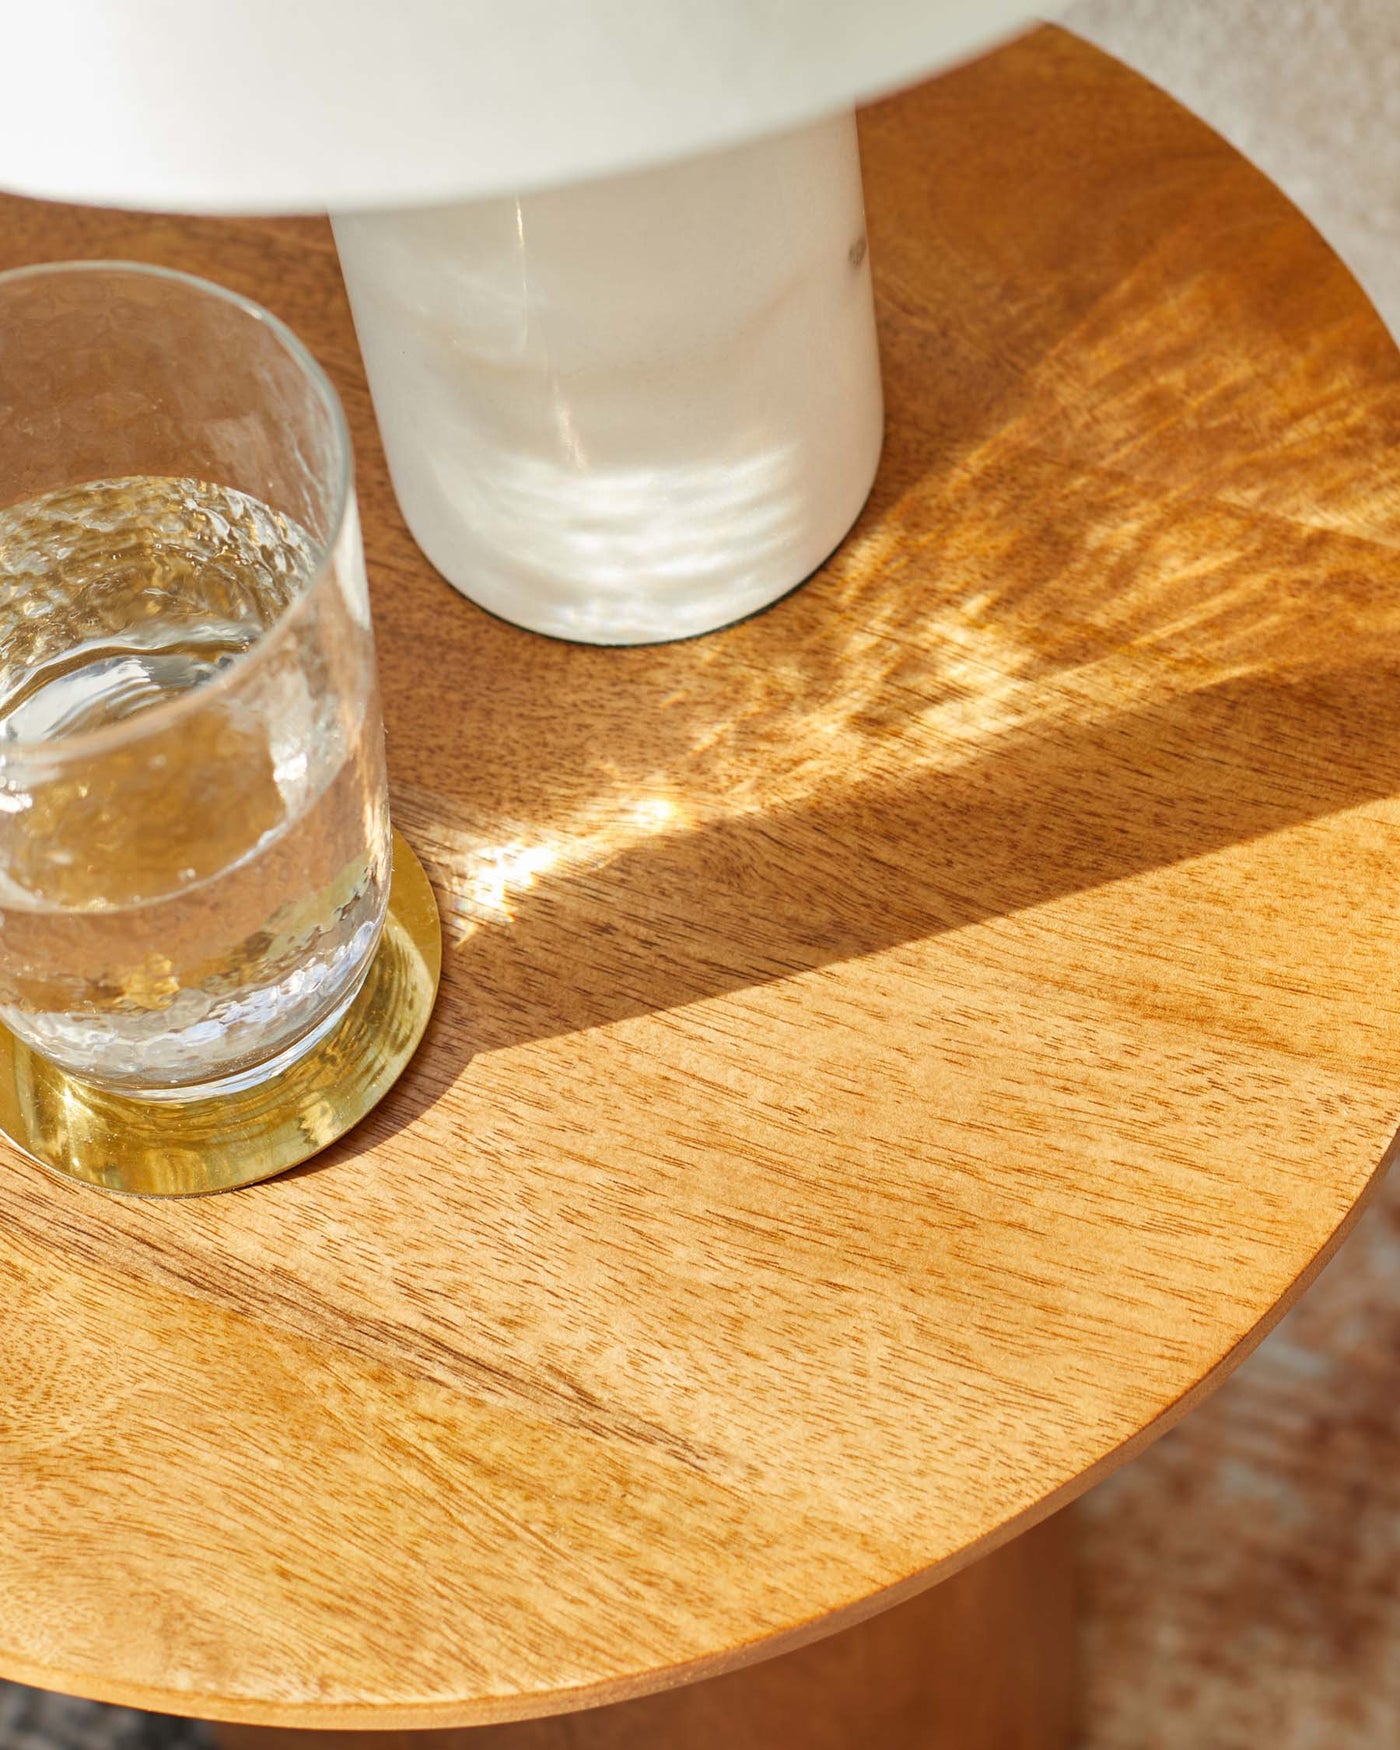 Cara light mango wood side table